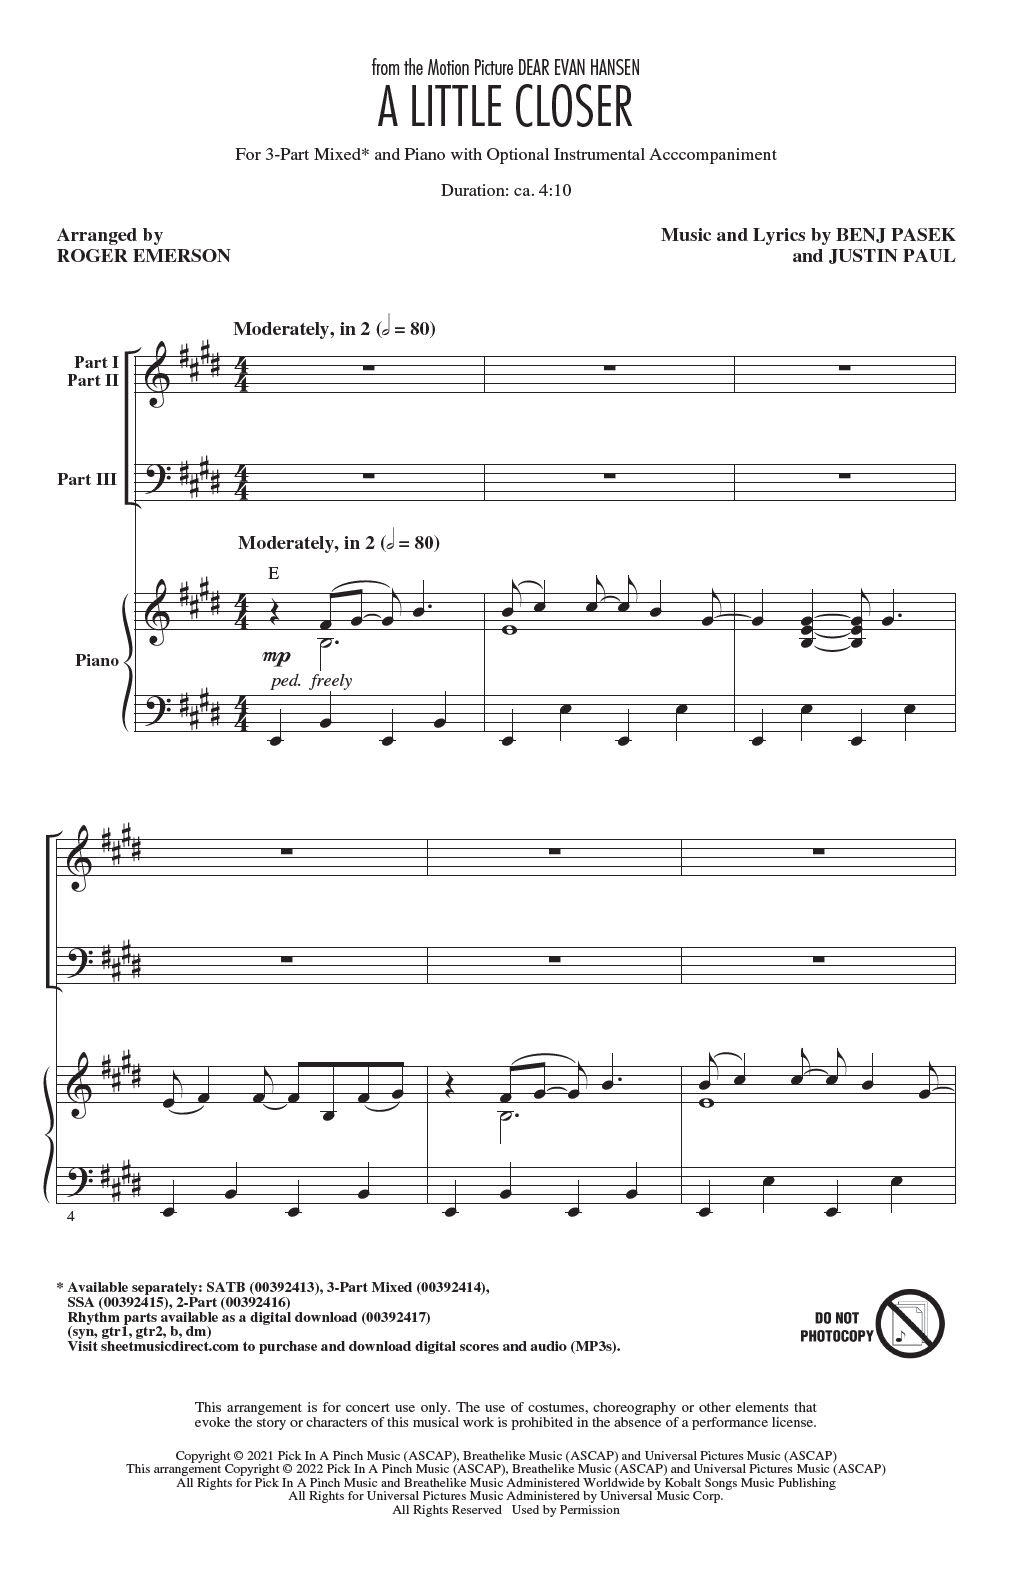 Pasek & Paul A Little Closer (from Dear Evan Hansen) (arr. Roger Emerson) sheet music notes and chords arranged for SATB Choir